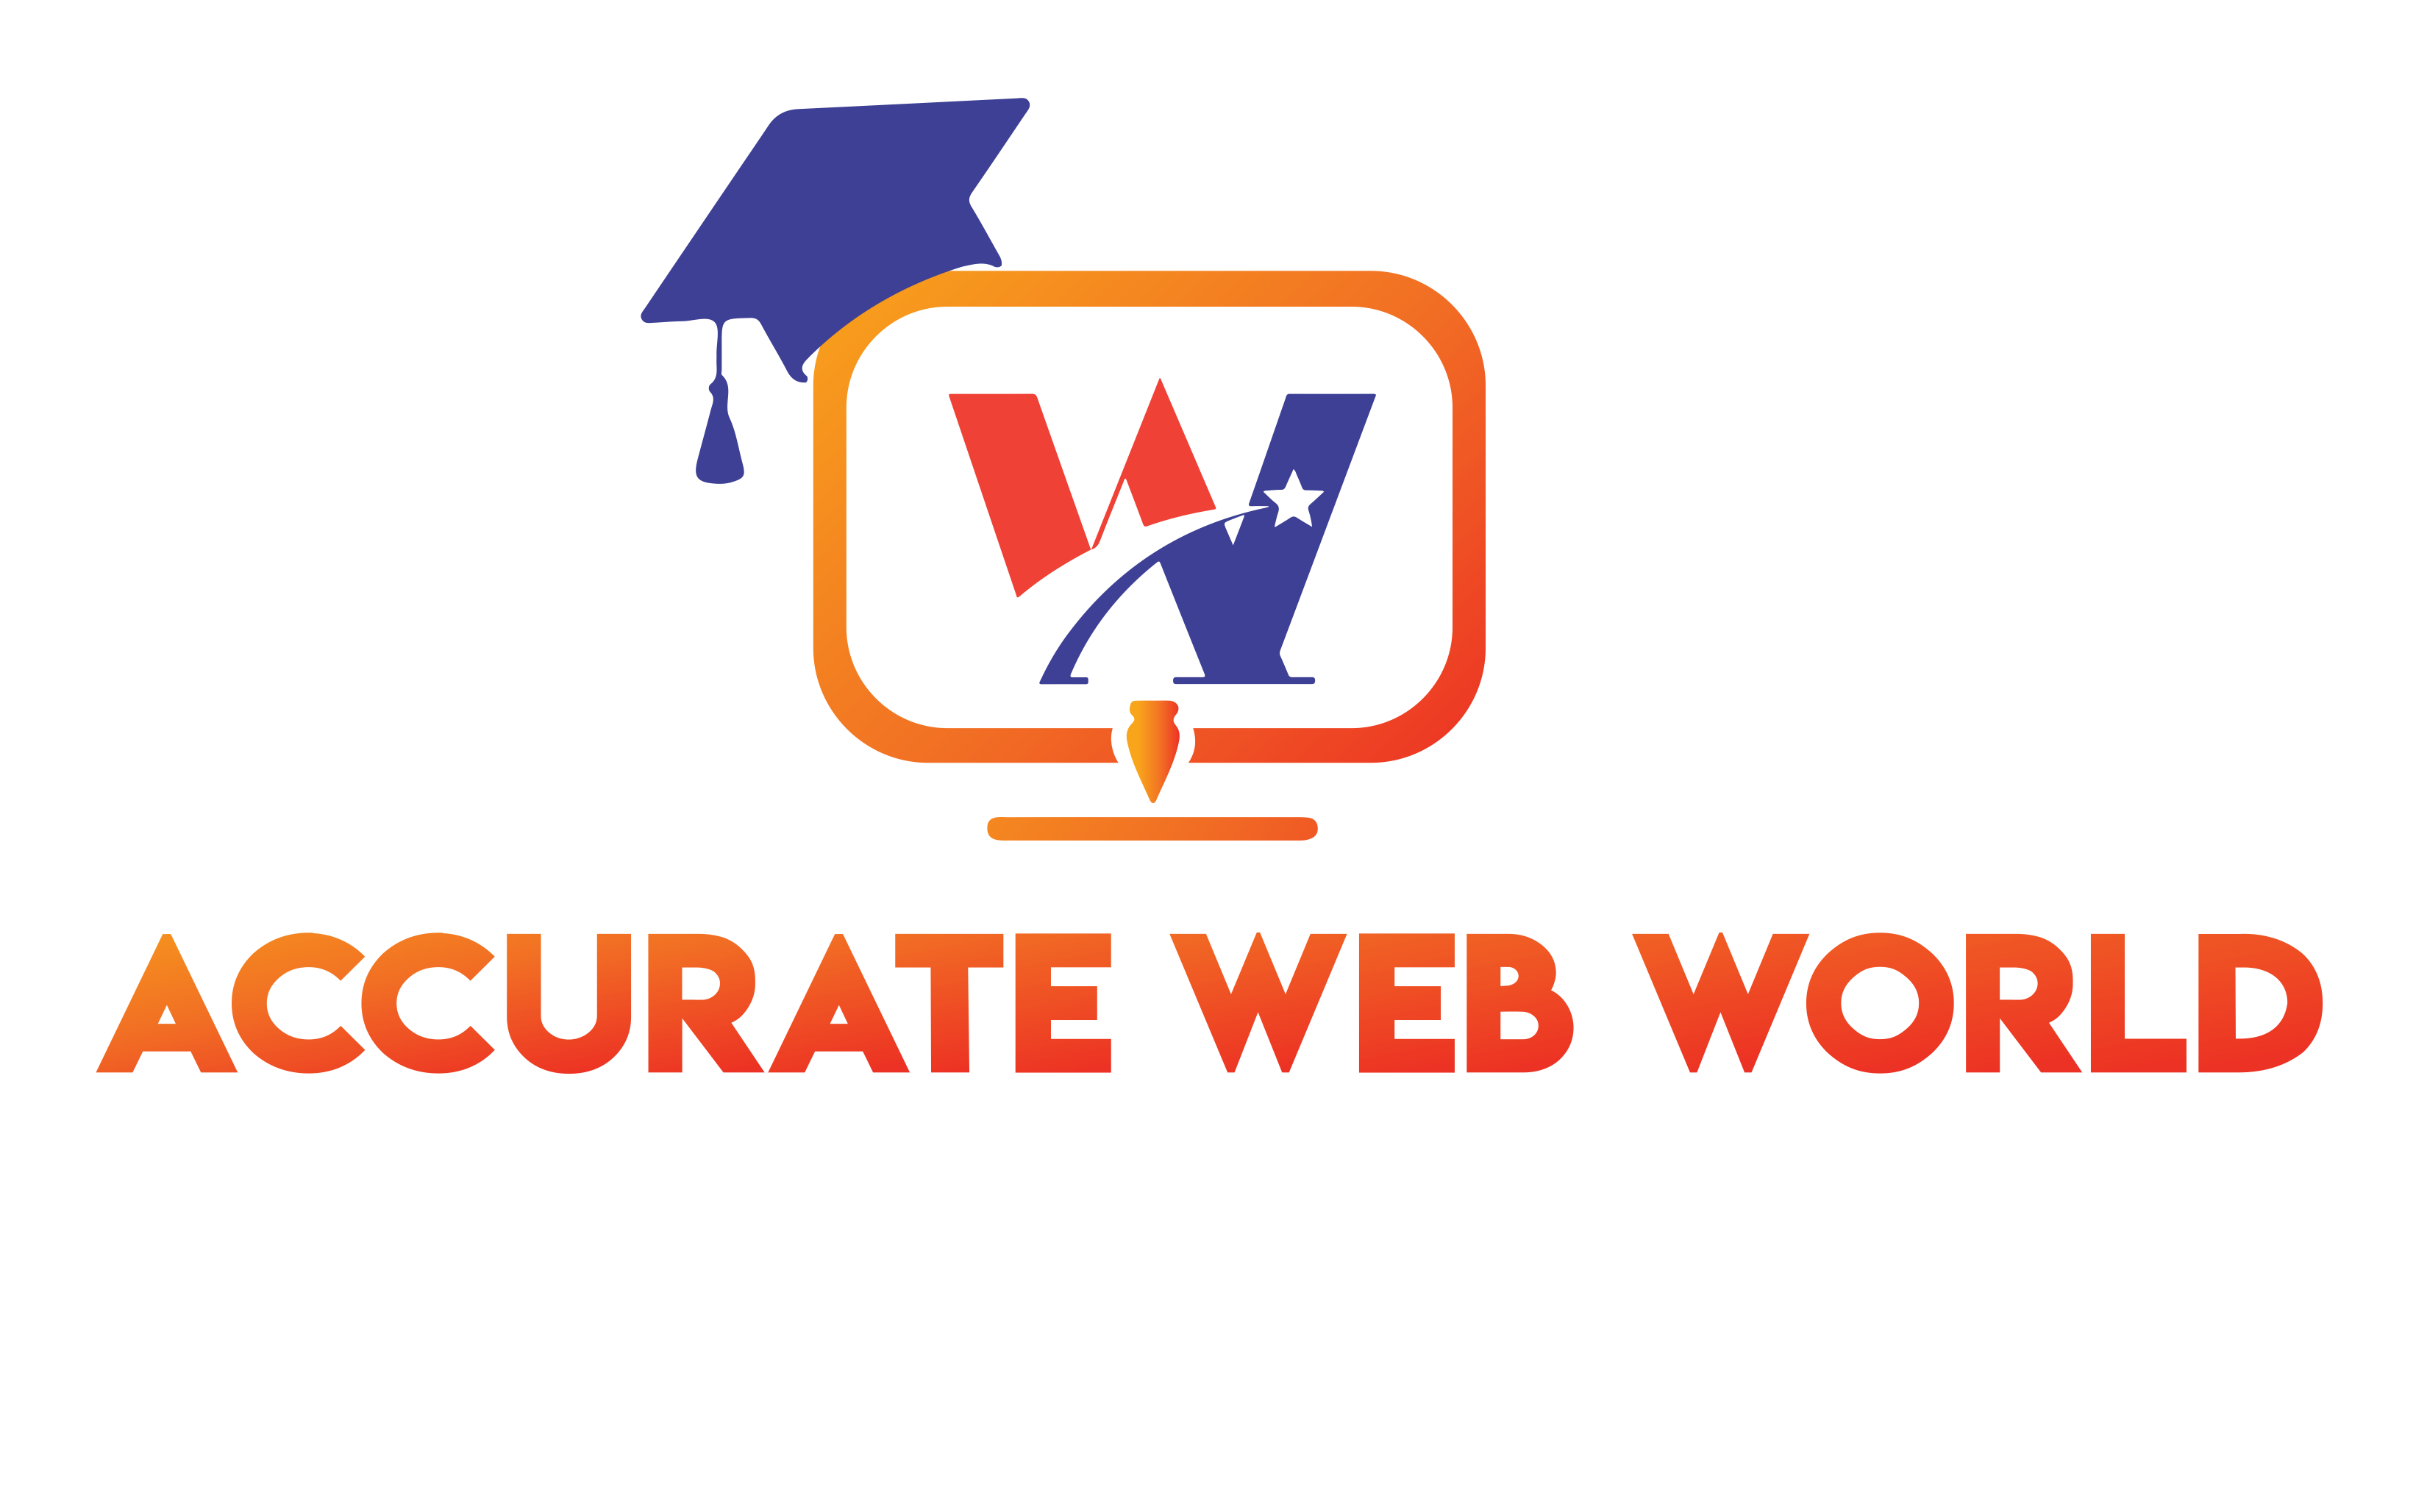 ACCURATE WEB WORLD